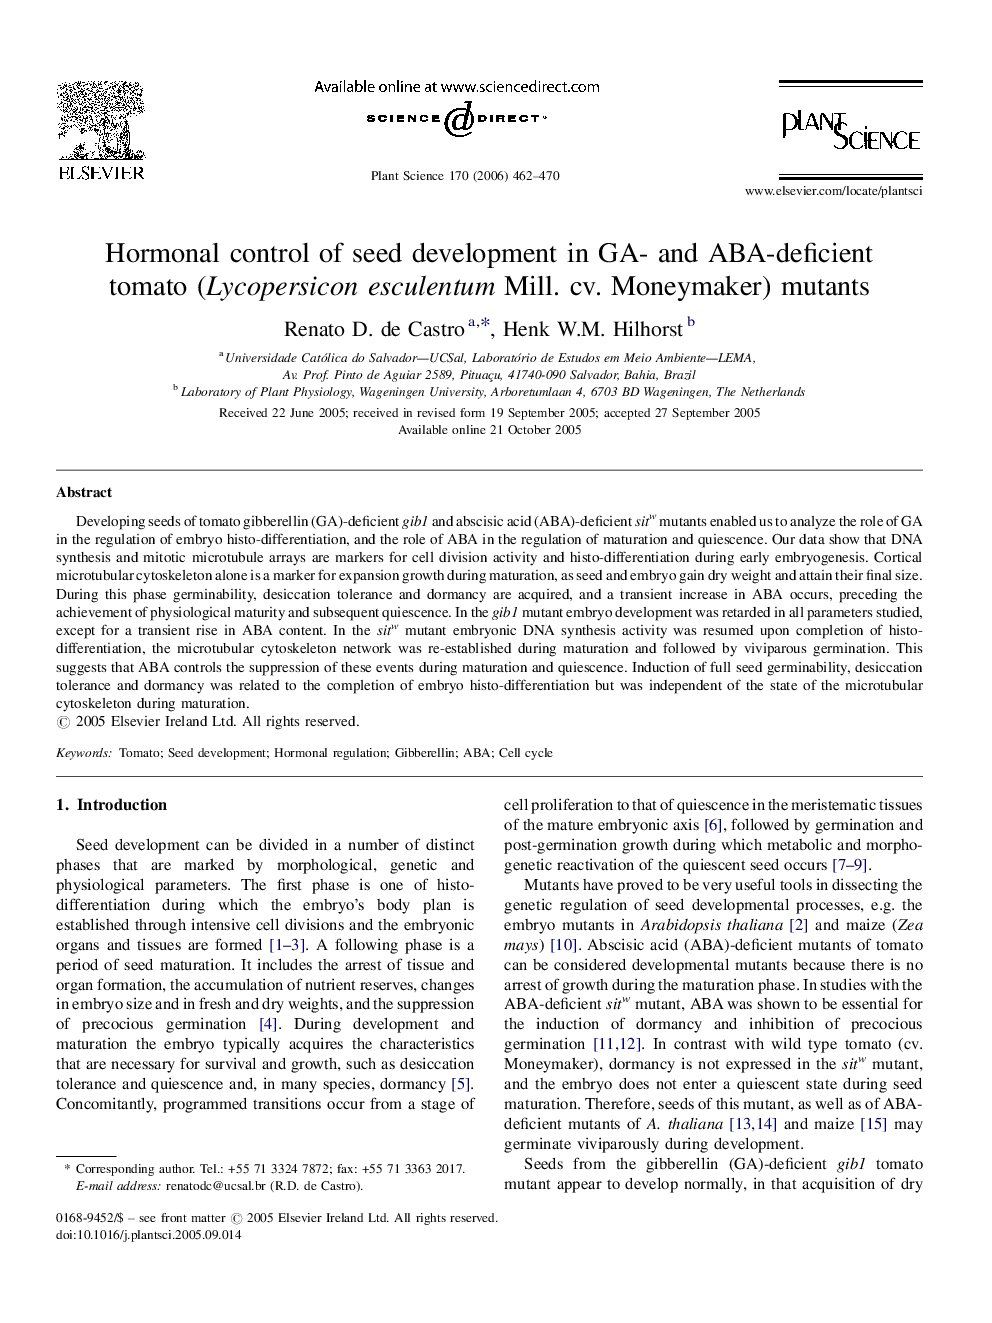 Hormonal control of seed development in GA- and ABA-deficient tomato (Lycopersicon esculentum Mill. cv. Moneymaker) mutants